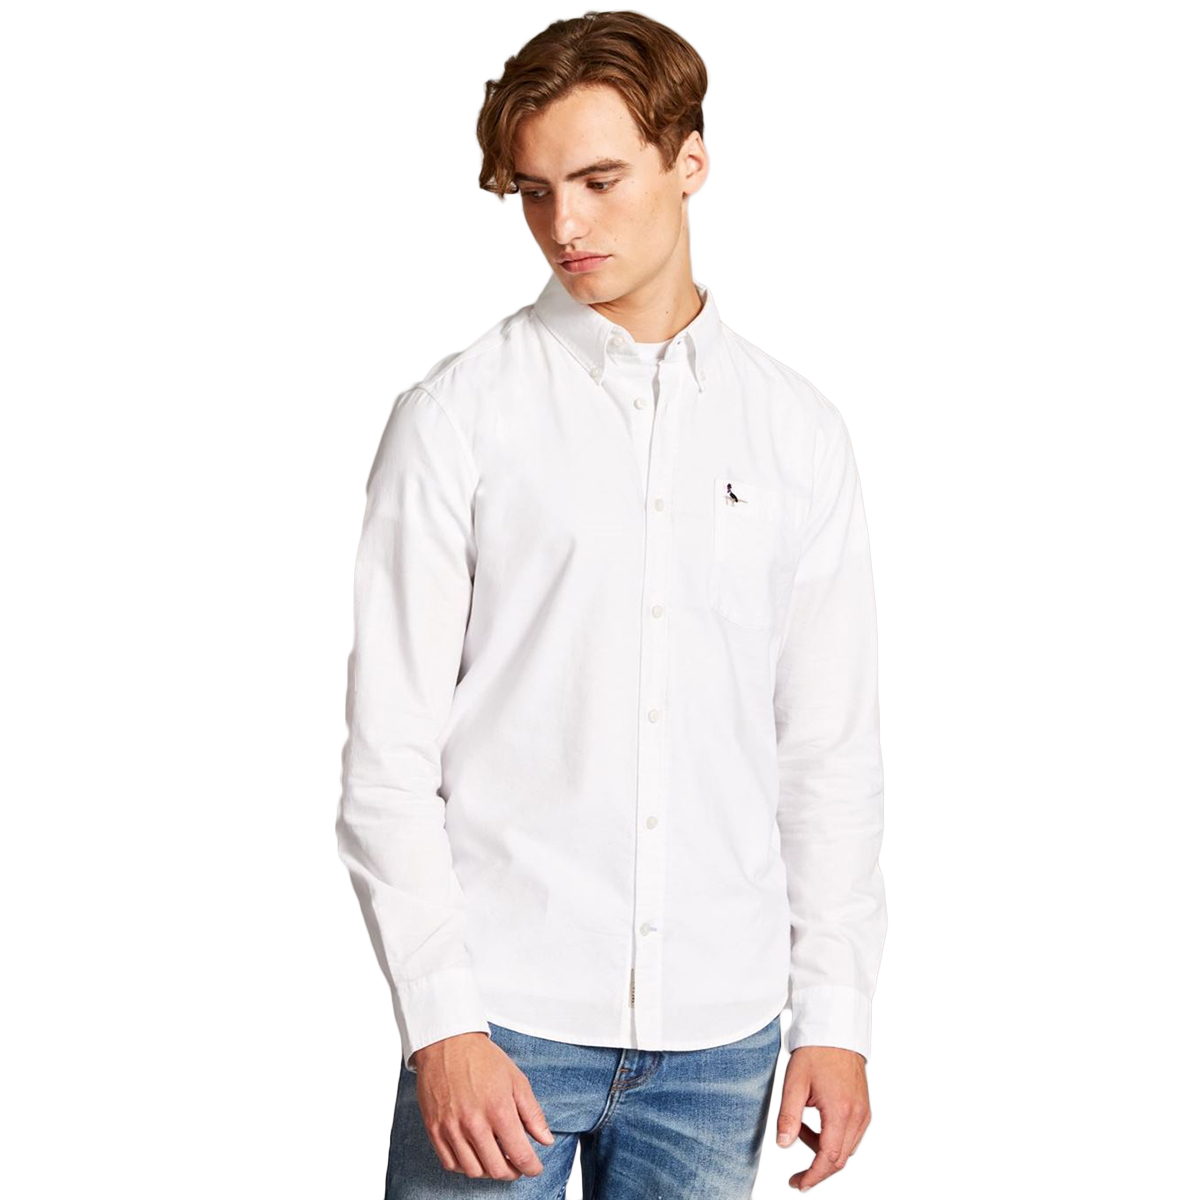 Jack Wills Men's Wadsworth Plain Oxford Shirt - White, L